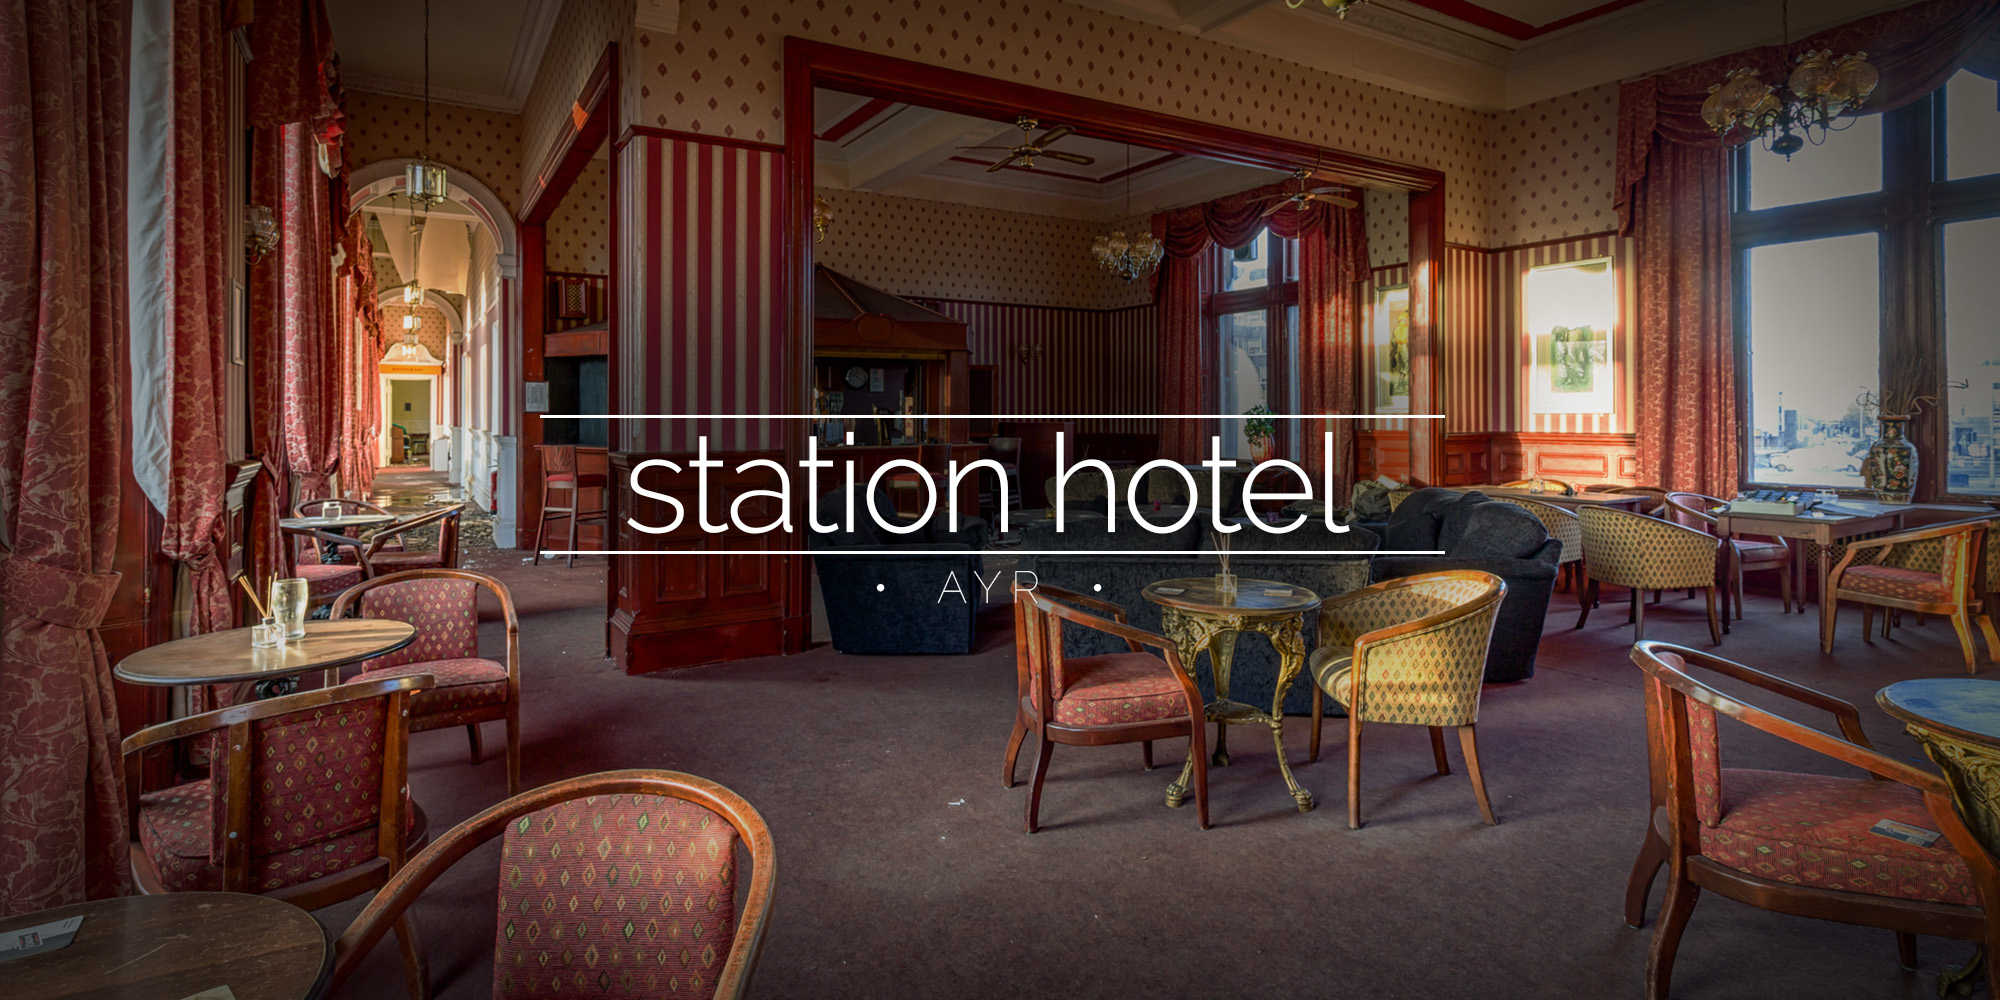 Station Hotel, Ayr